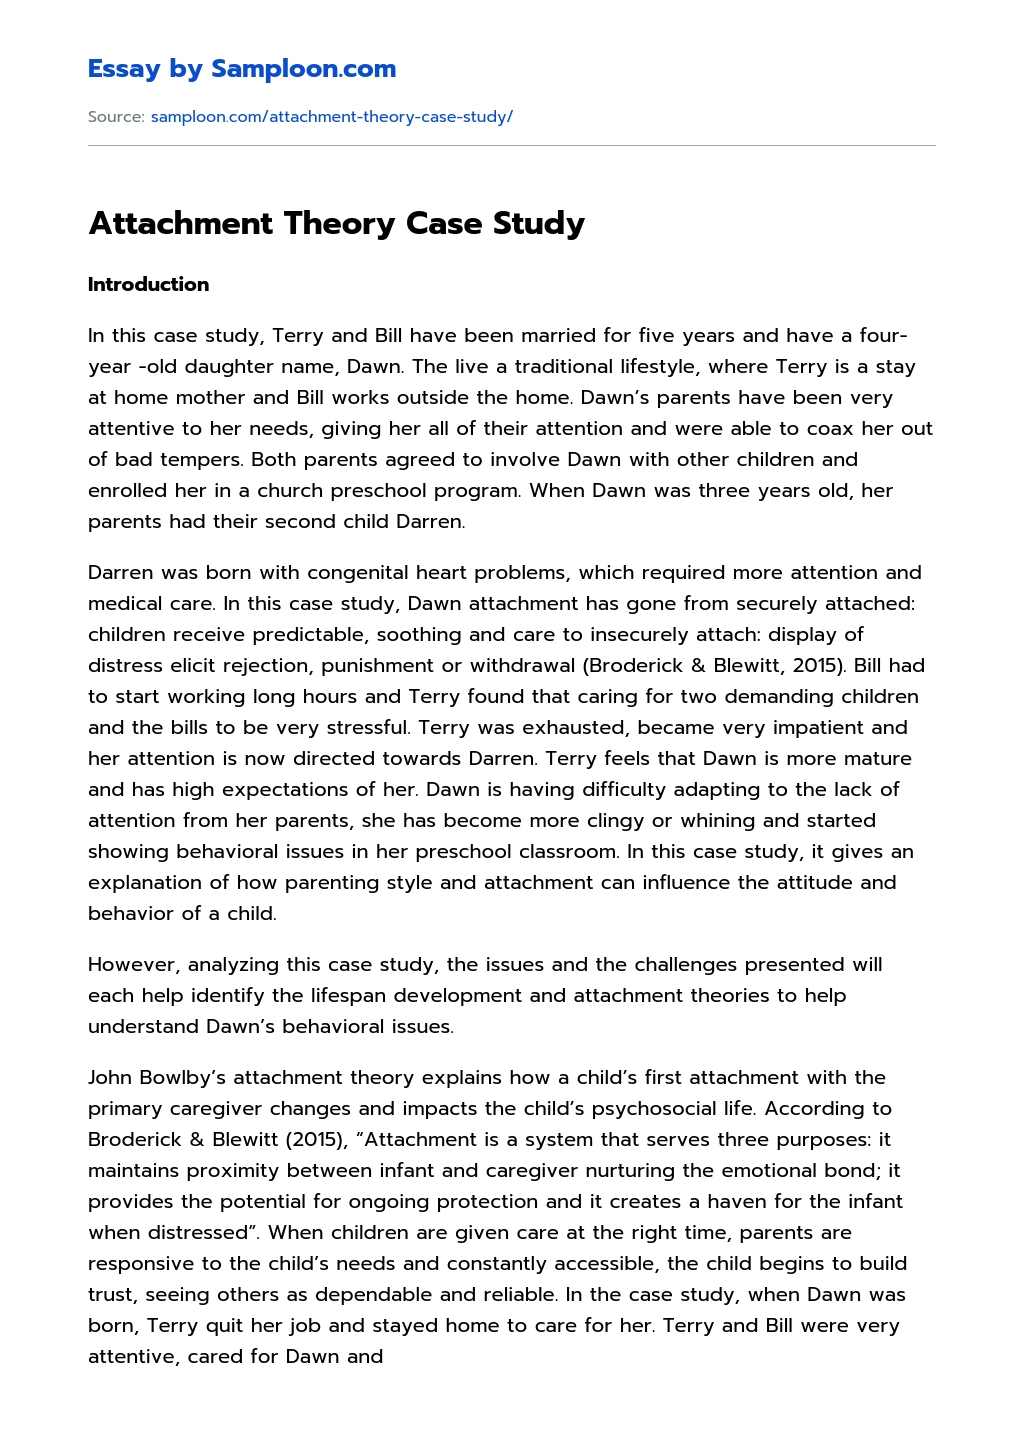 Attachment Theory Case Study essay